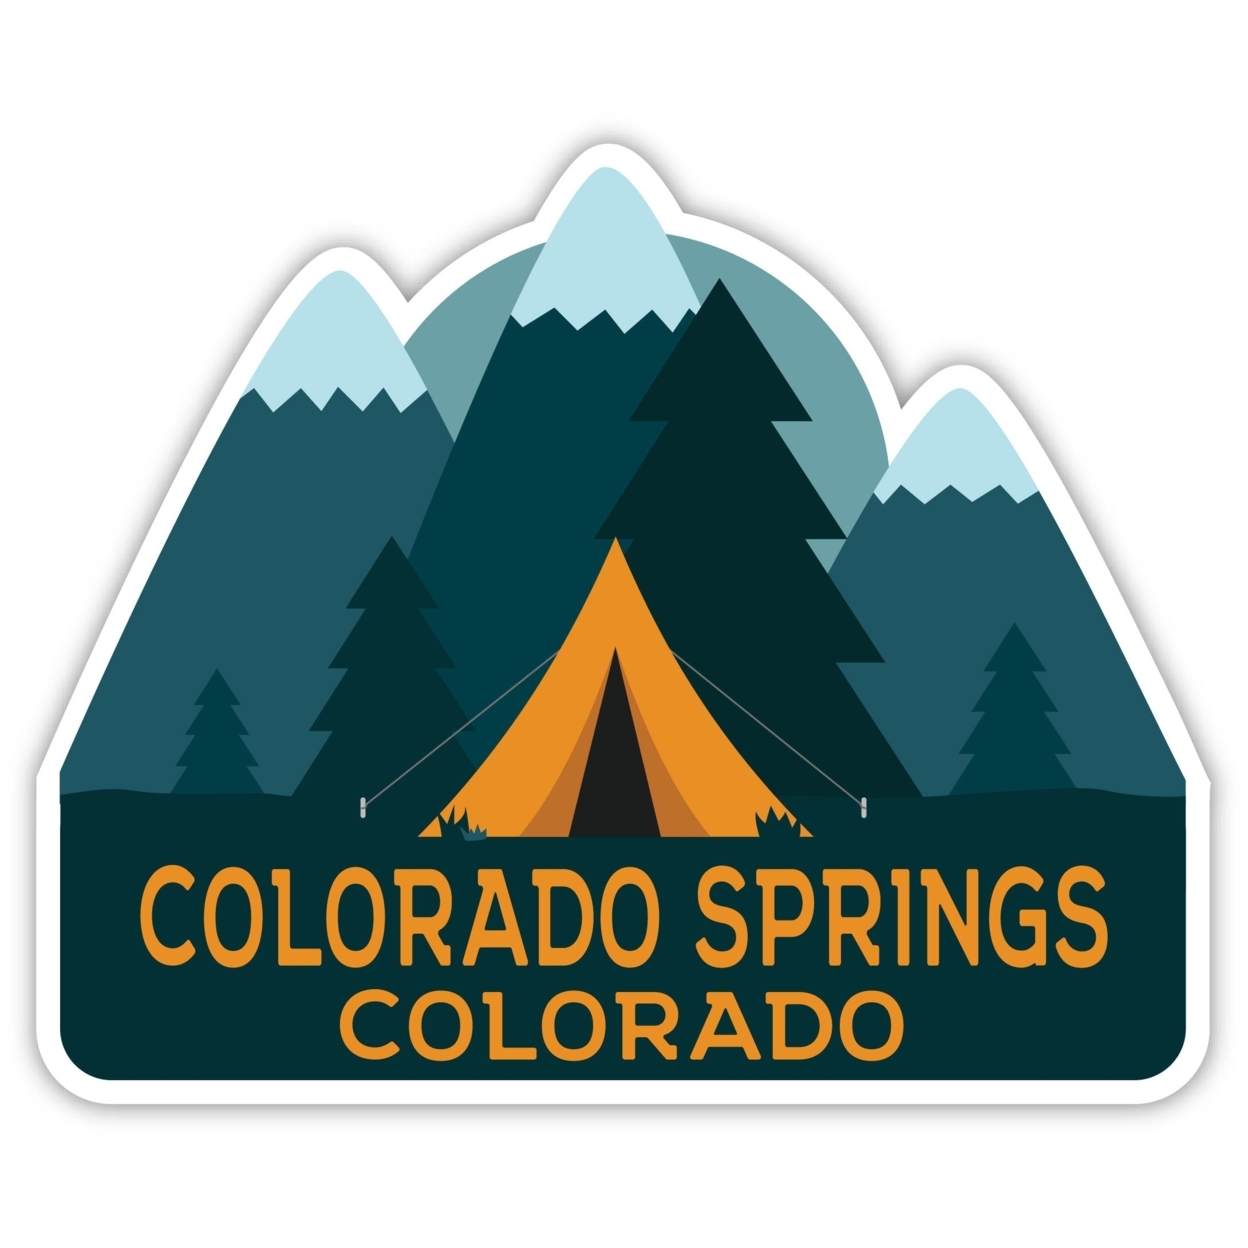 Colorado Springs Colorado Souvenir Decorative Stickers (Choose Theme And Size) - 4-Pack, 6-Inch, Tent